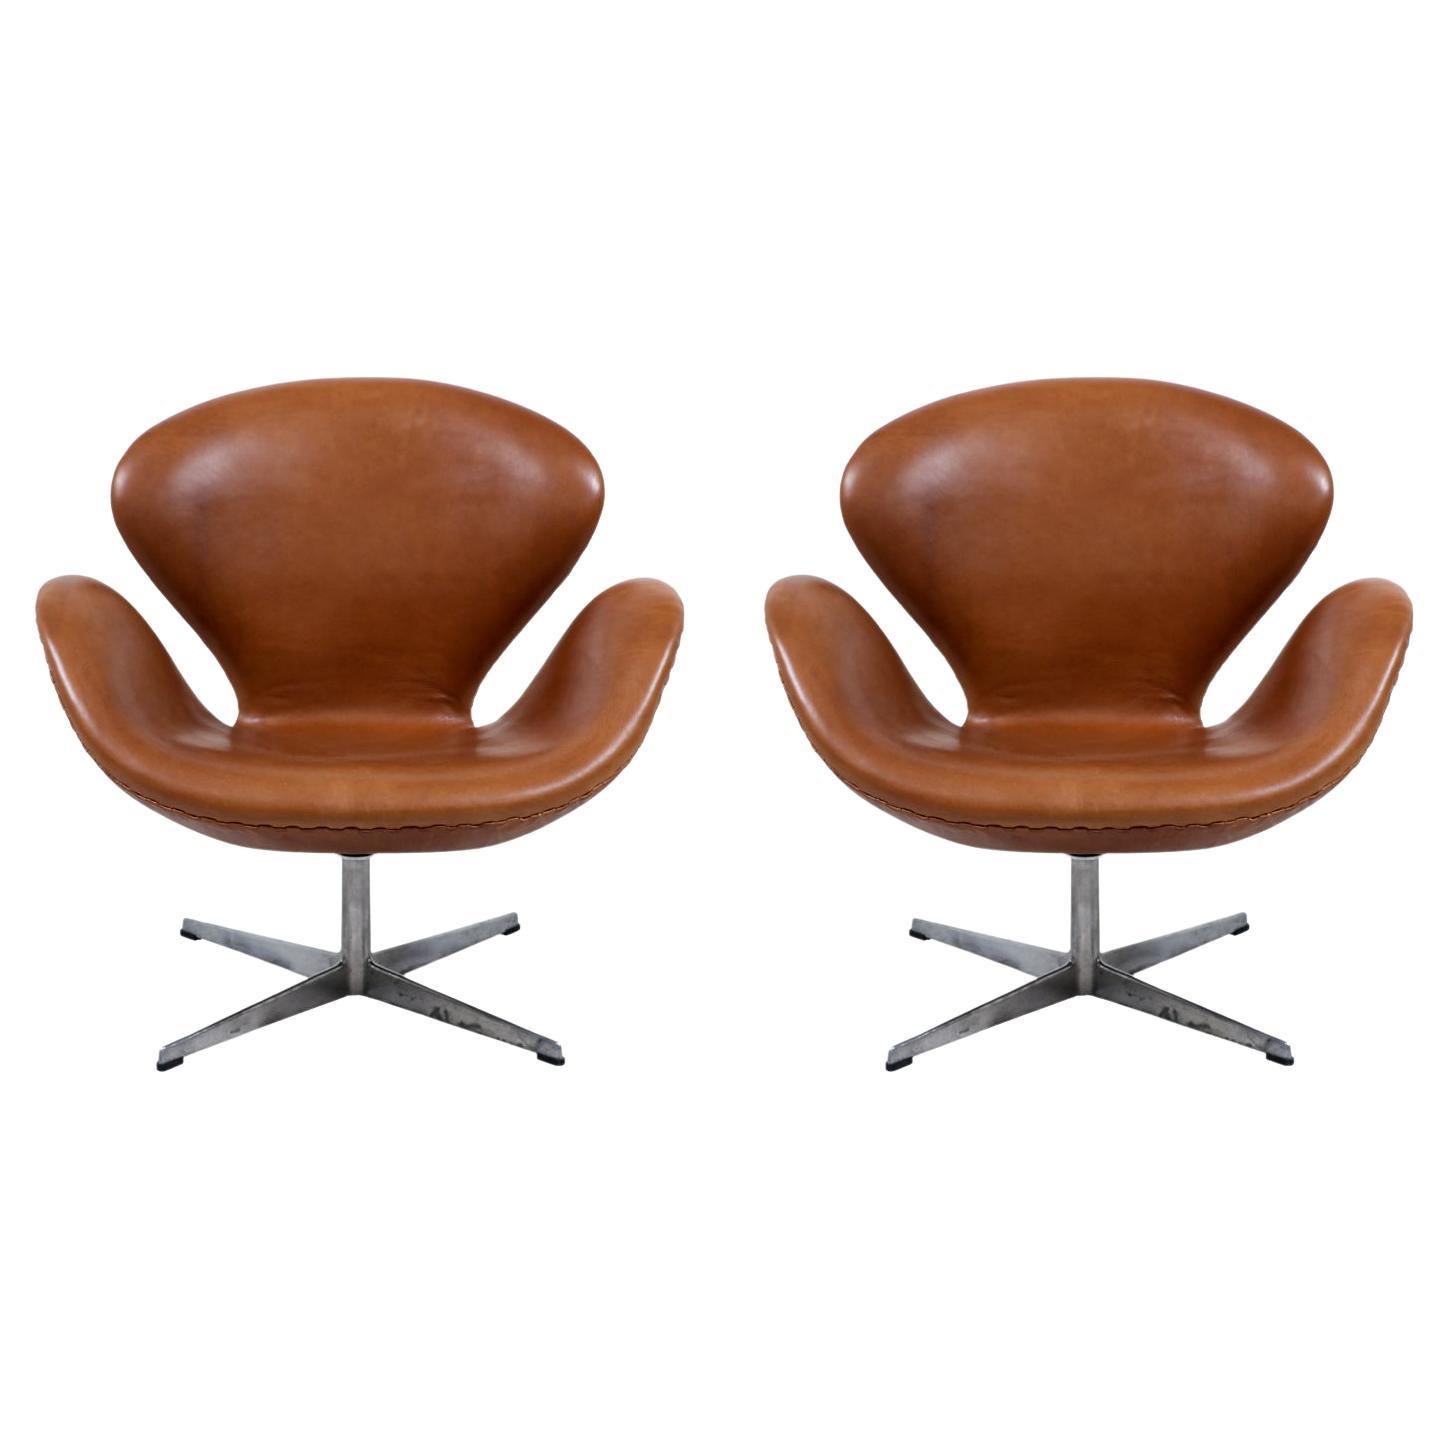 Arne Jacobsen Leather "Swan" Chairs for Fritz Hansen